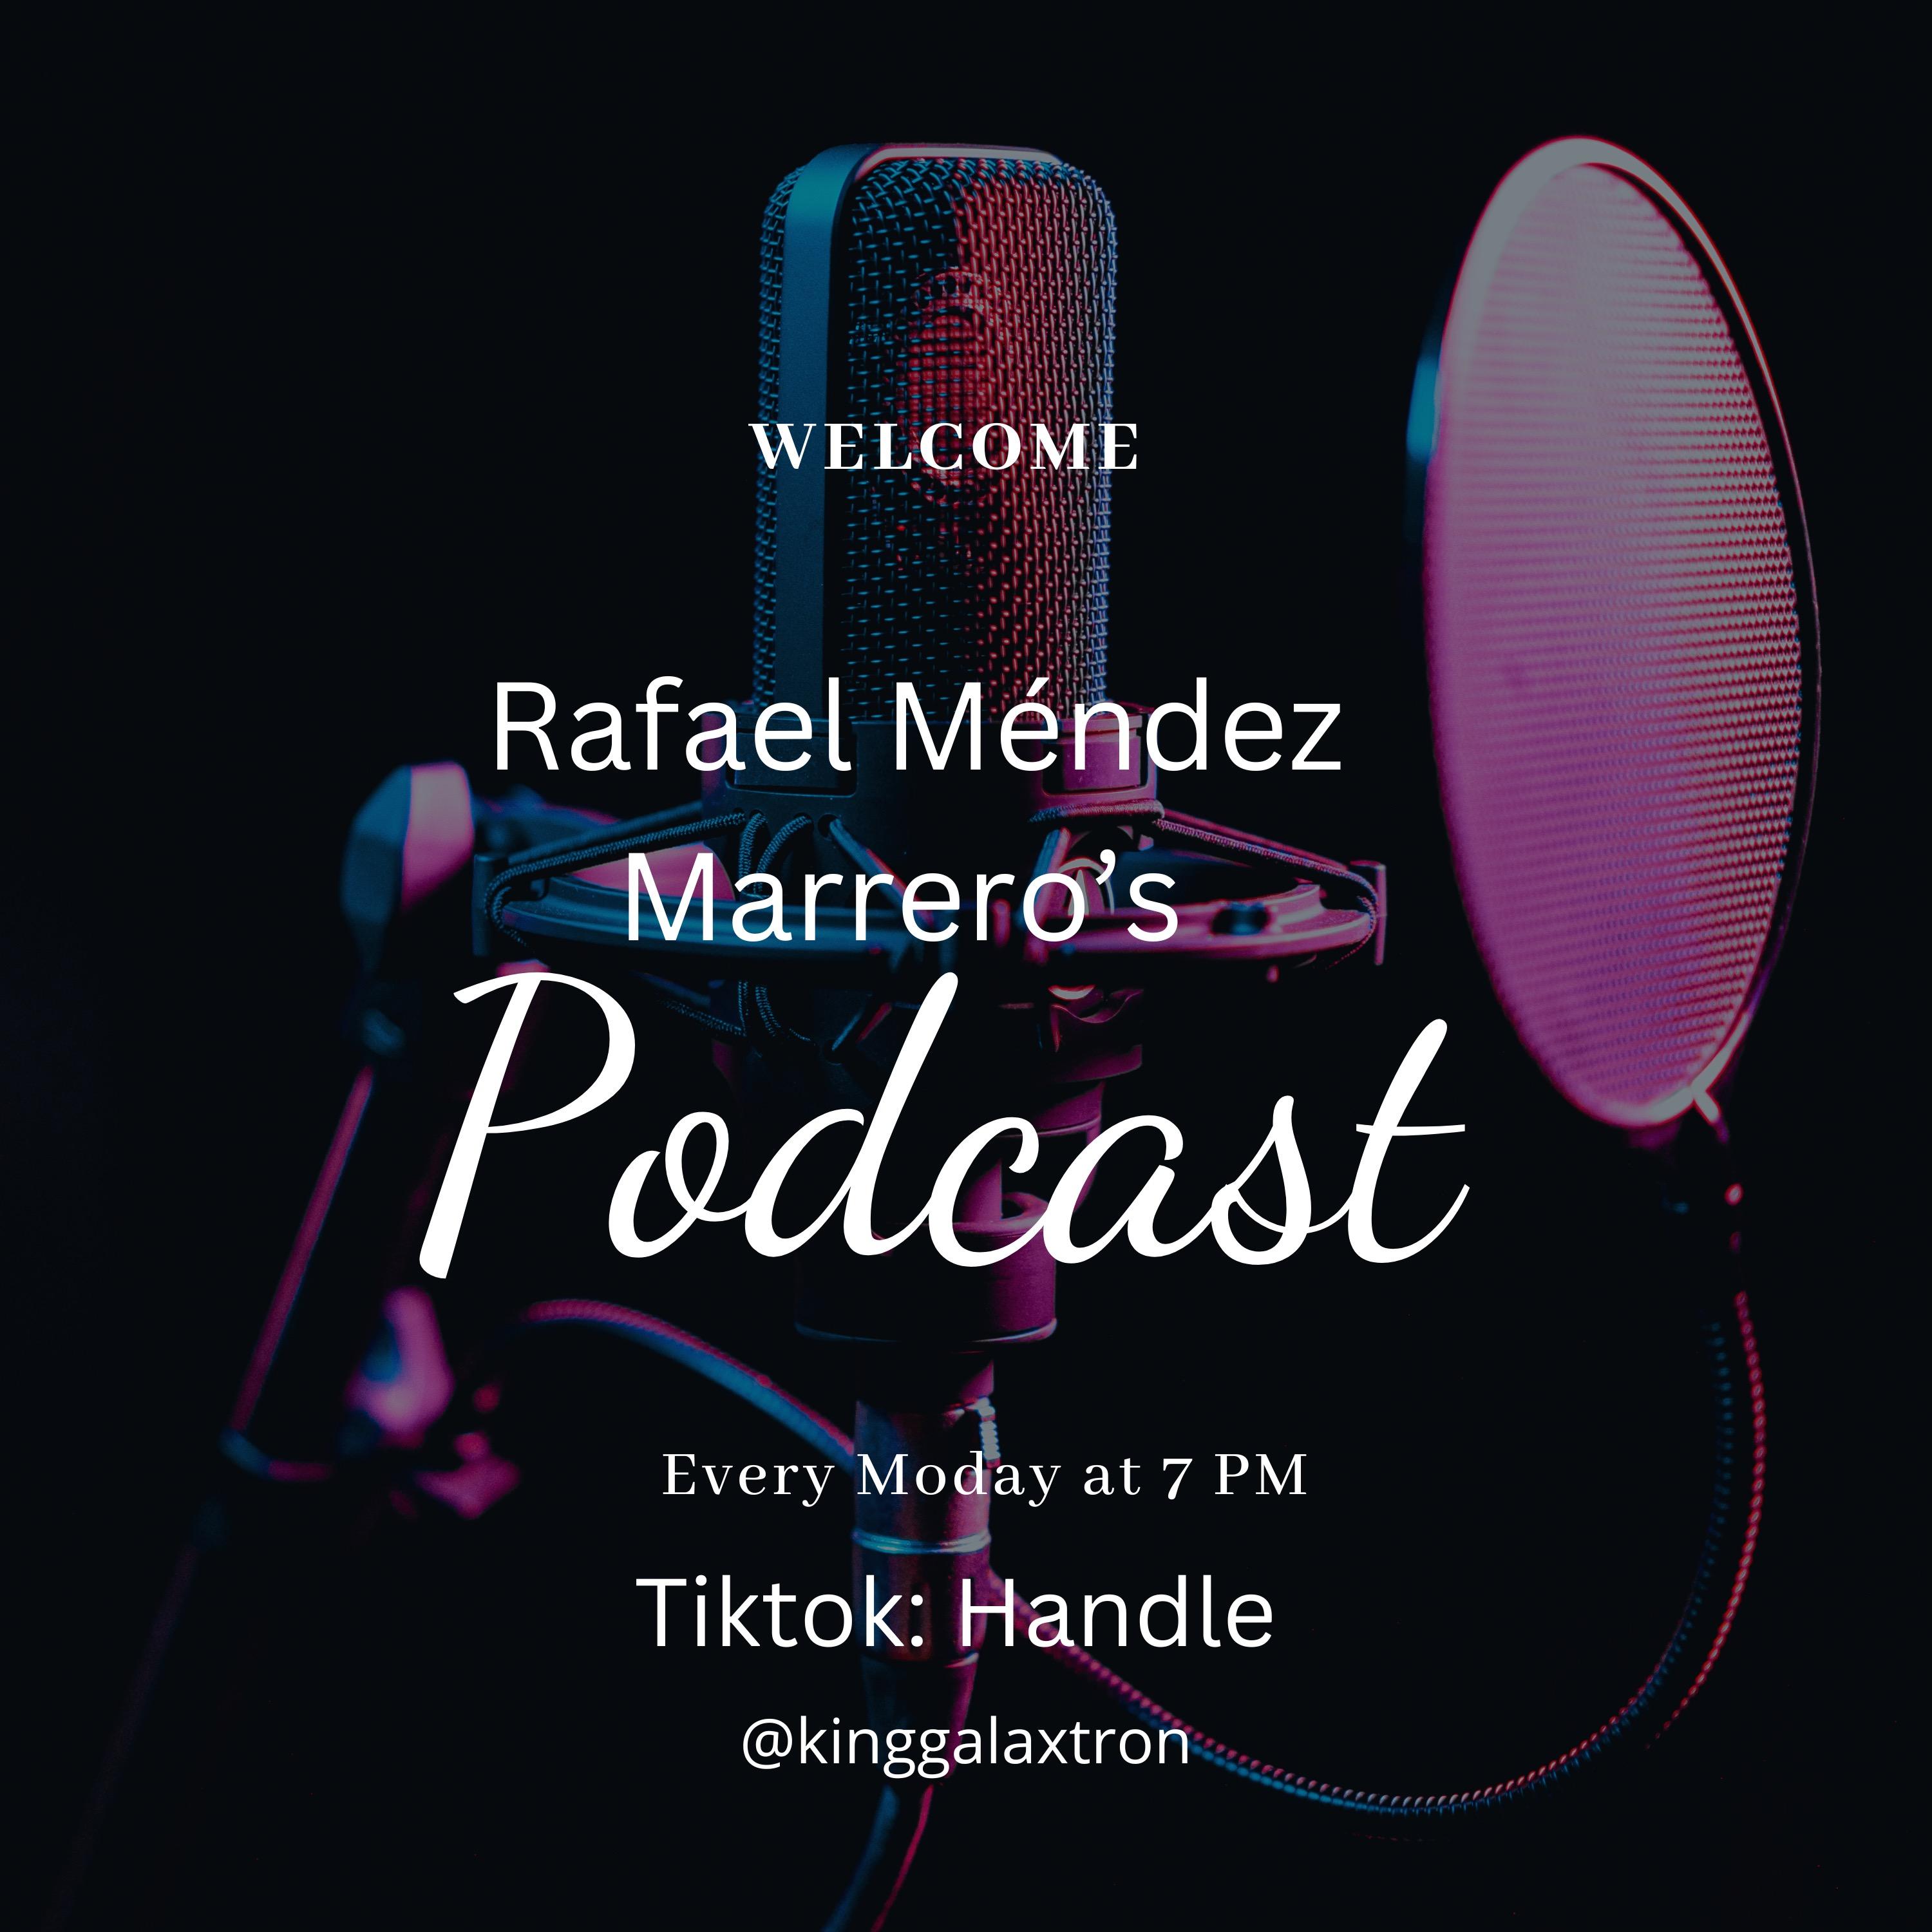 Rafael Mendez’s Podcast